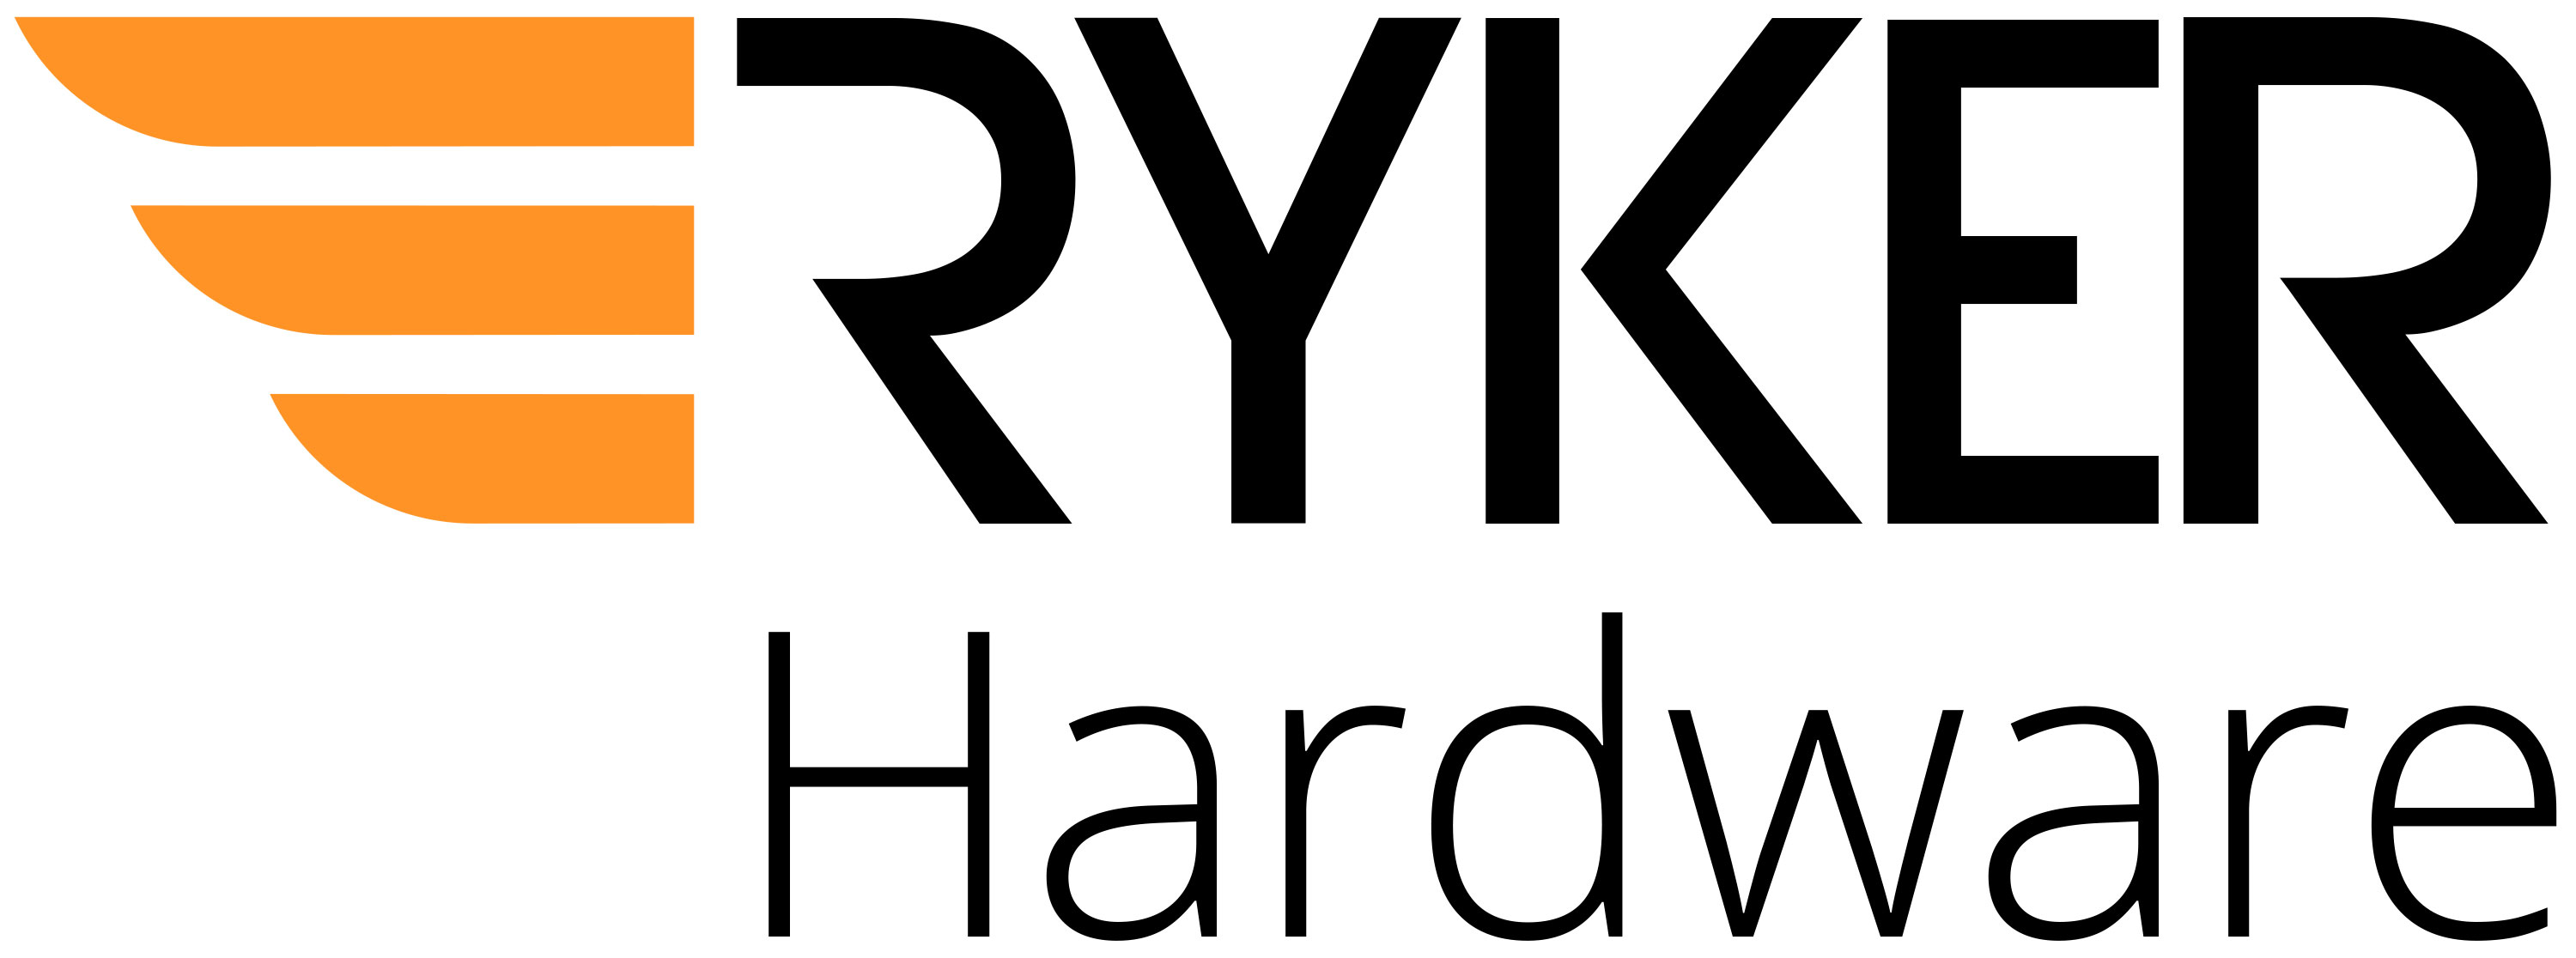 Ryker Hardware